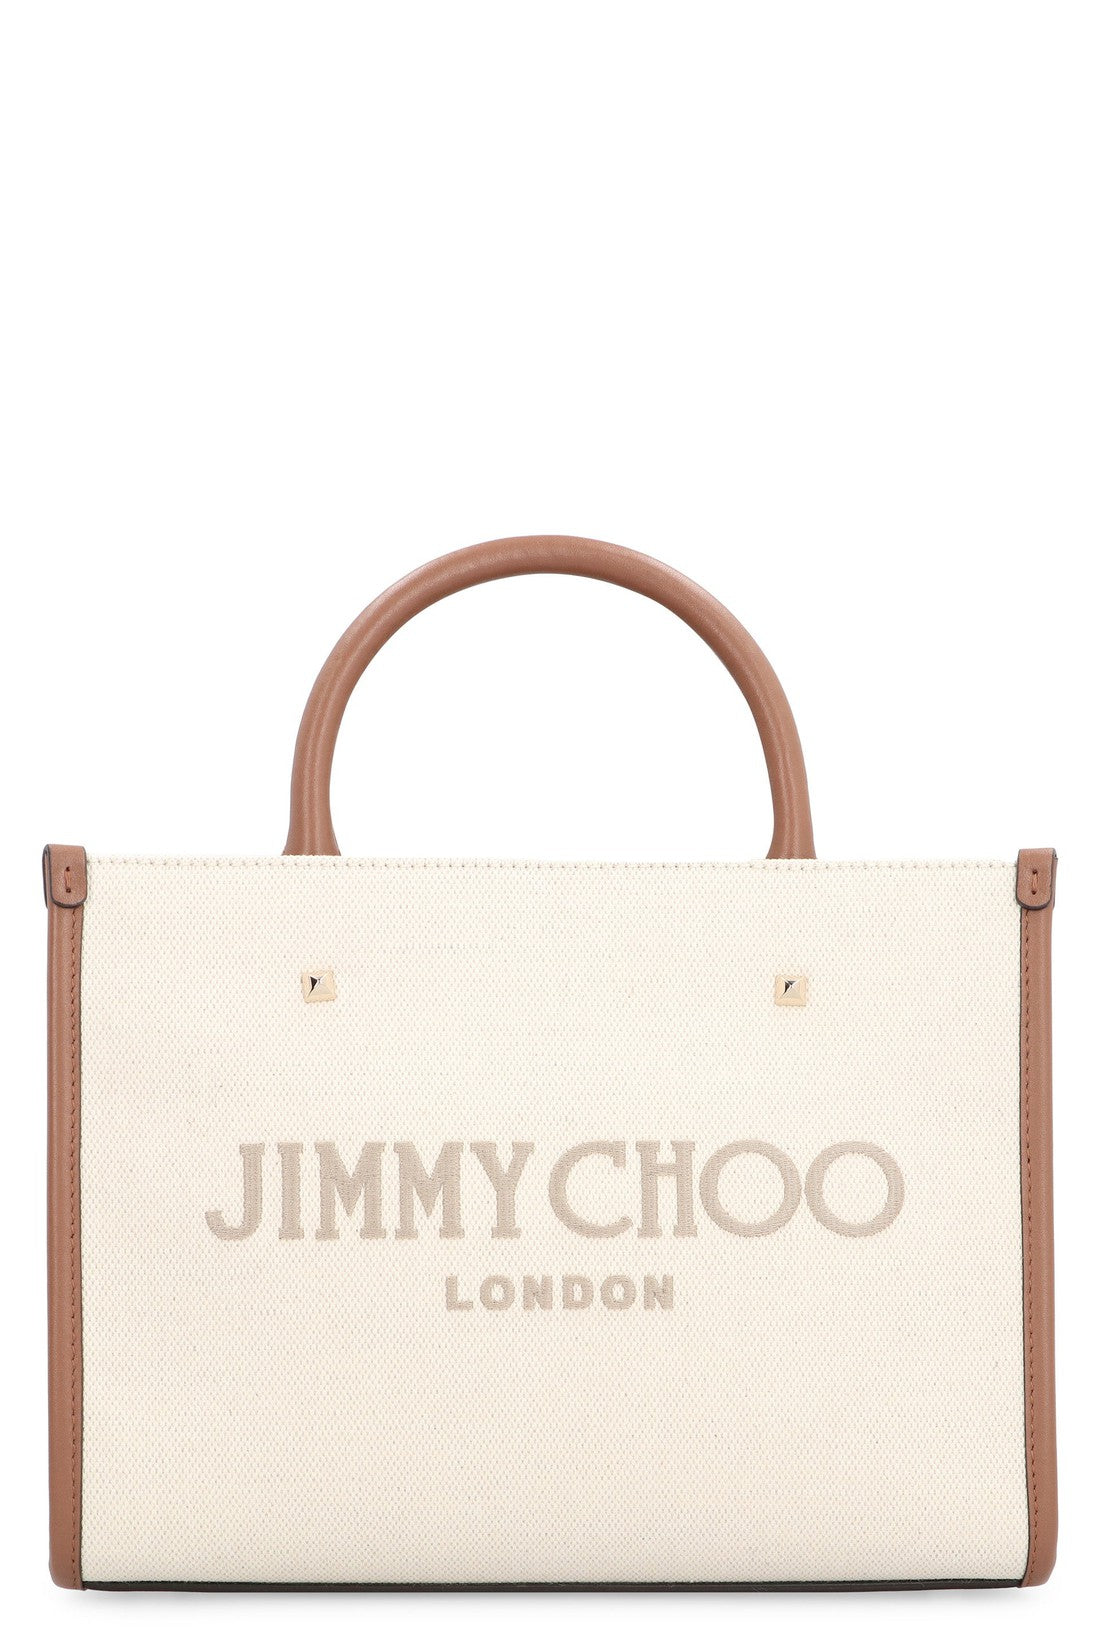 Jimmy Choo-OUTLET-SALE-Avenue S tote bag-ARCHIVIST